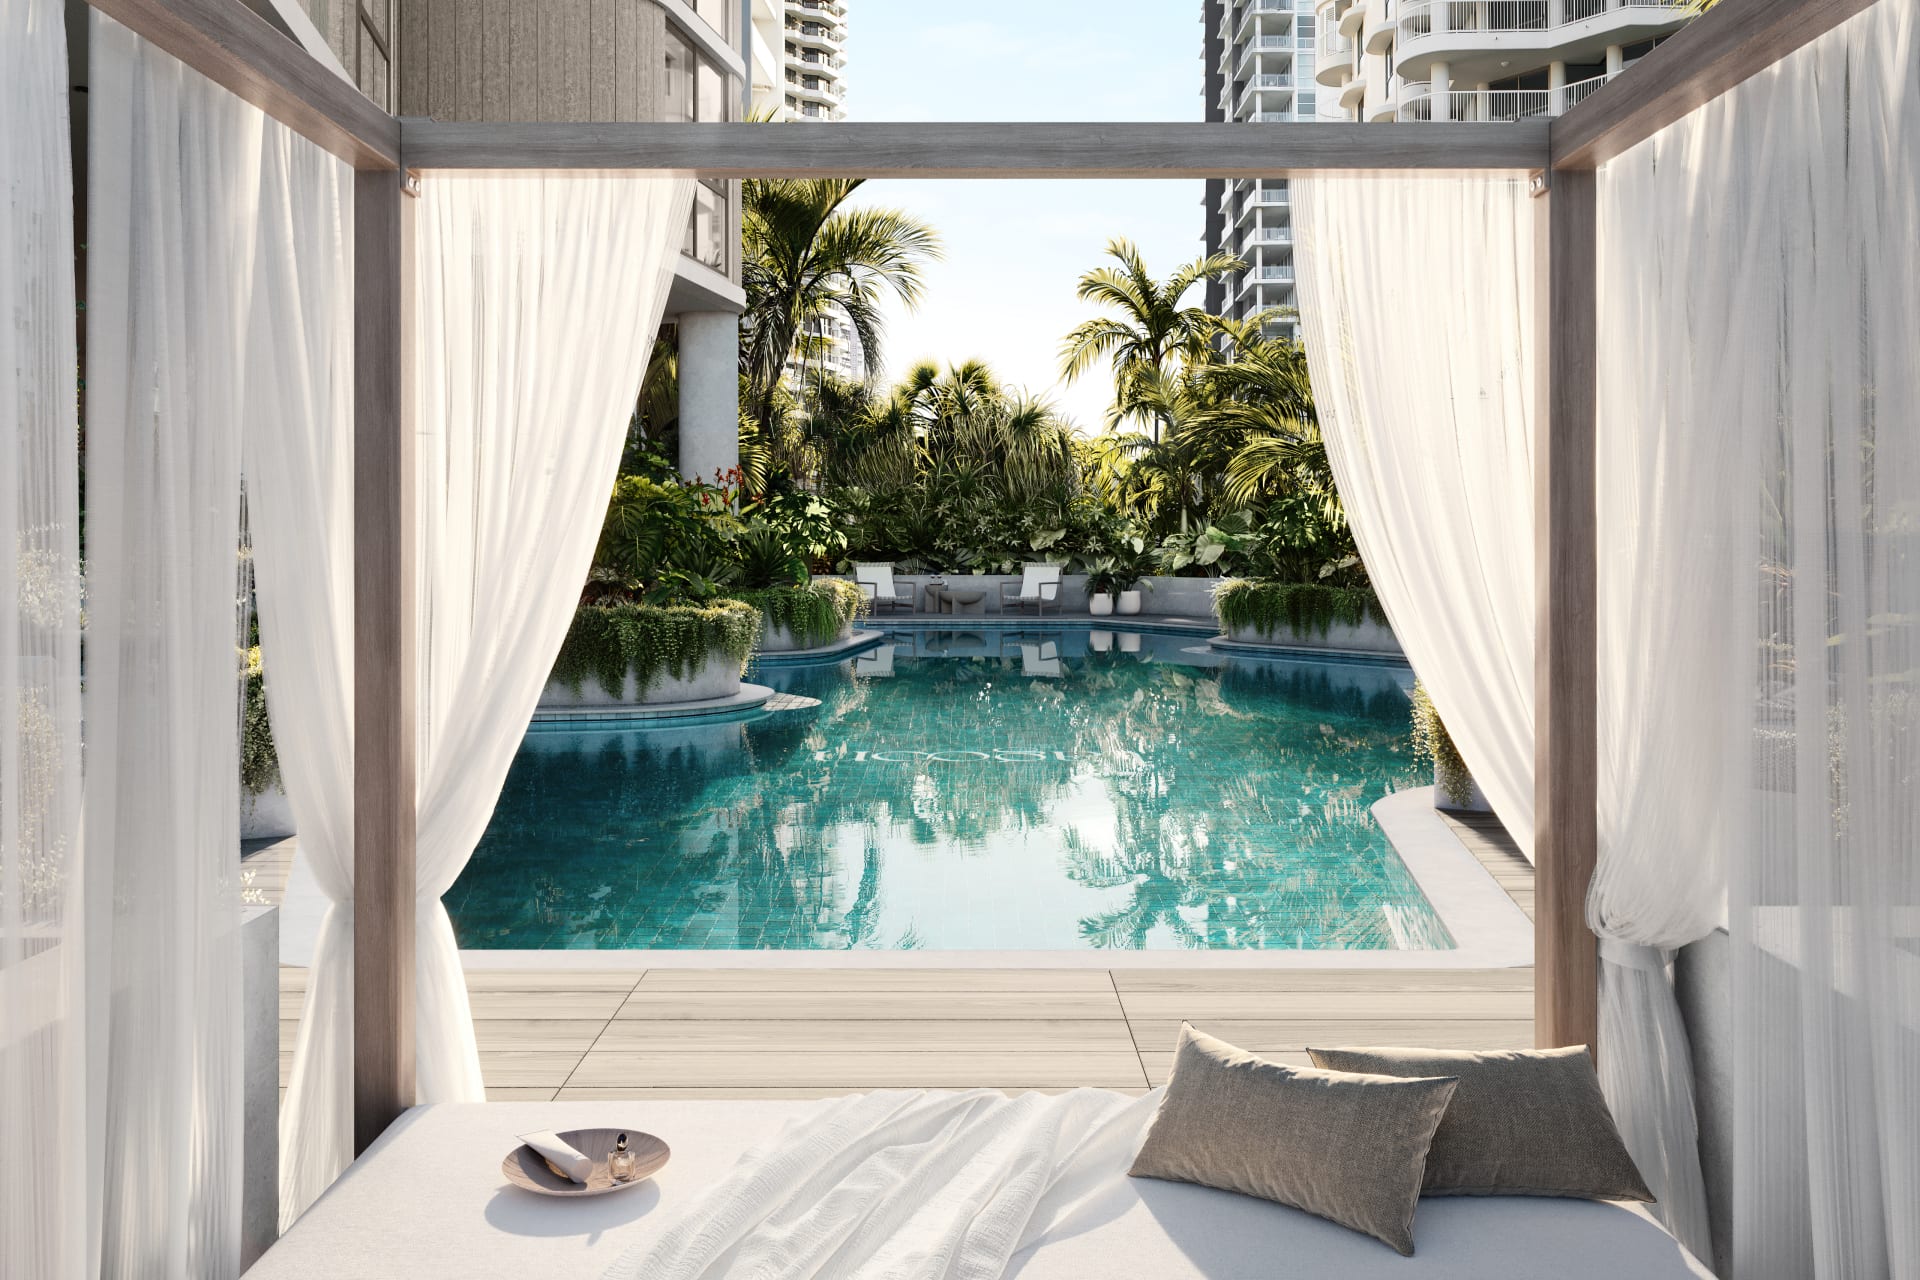 Drew Group begin sales at Lagoon, Main Beach apartment development